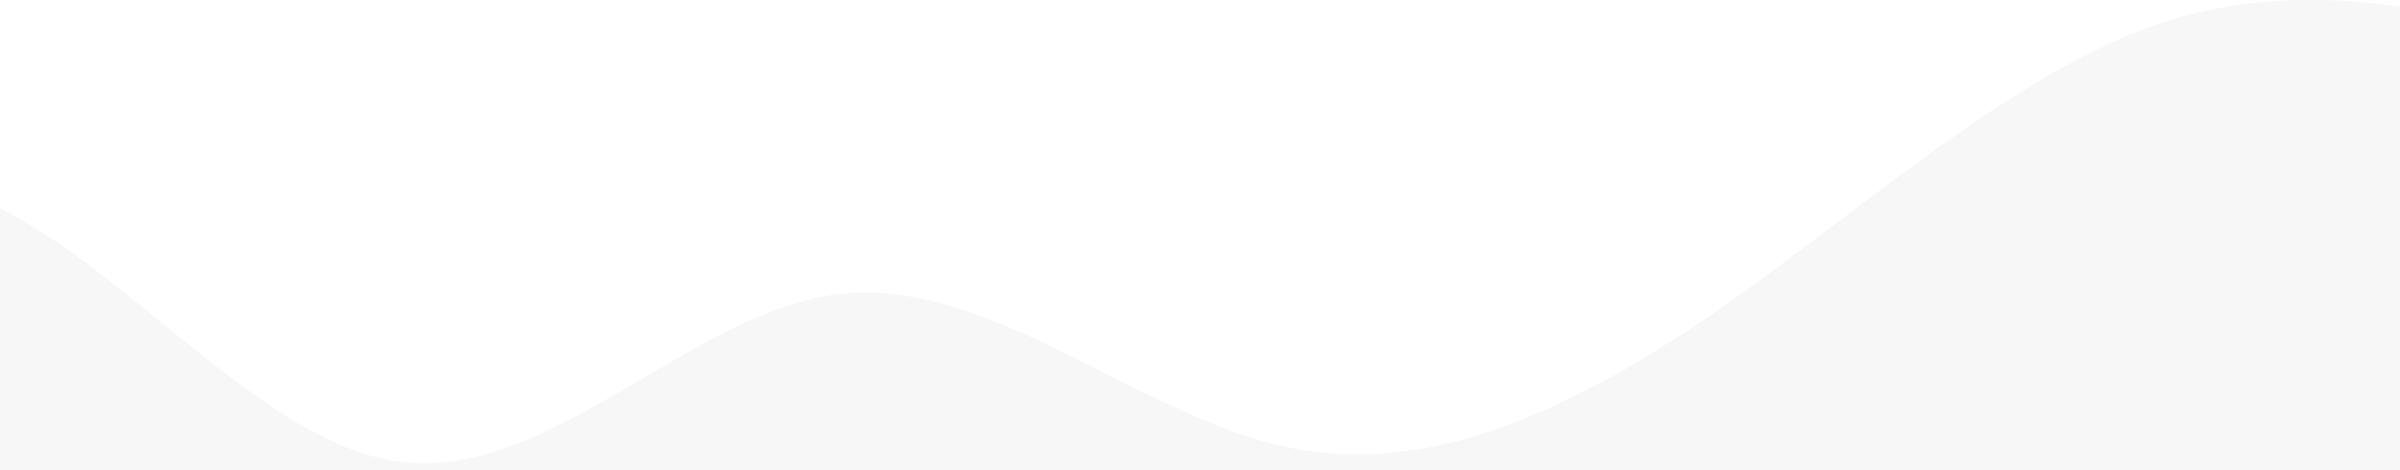 Wave_grey_bottom_left_shape_01